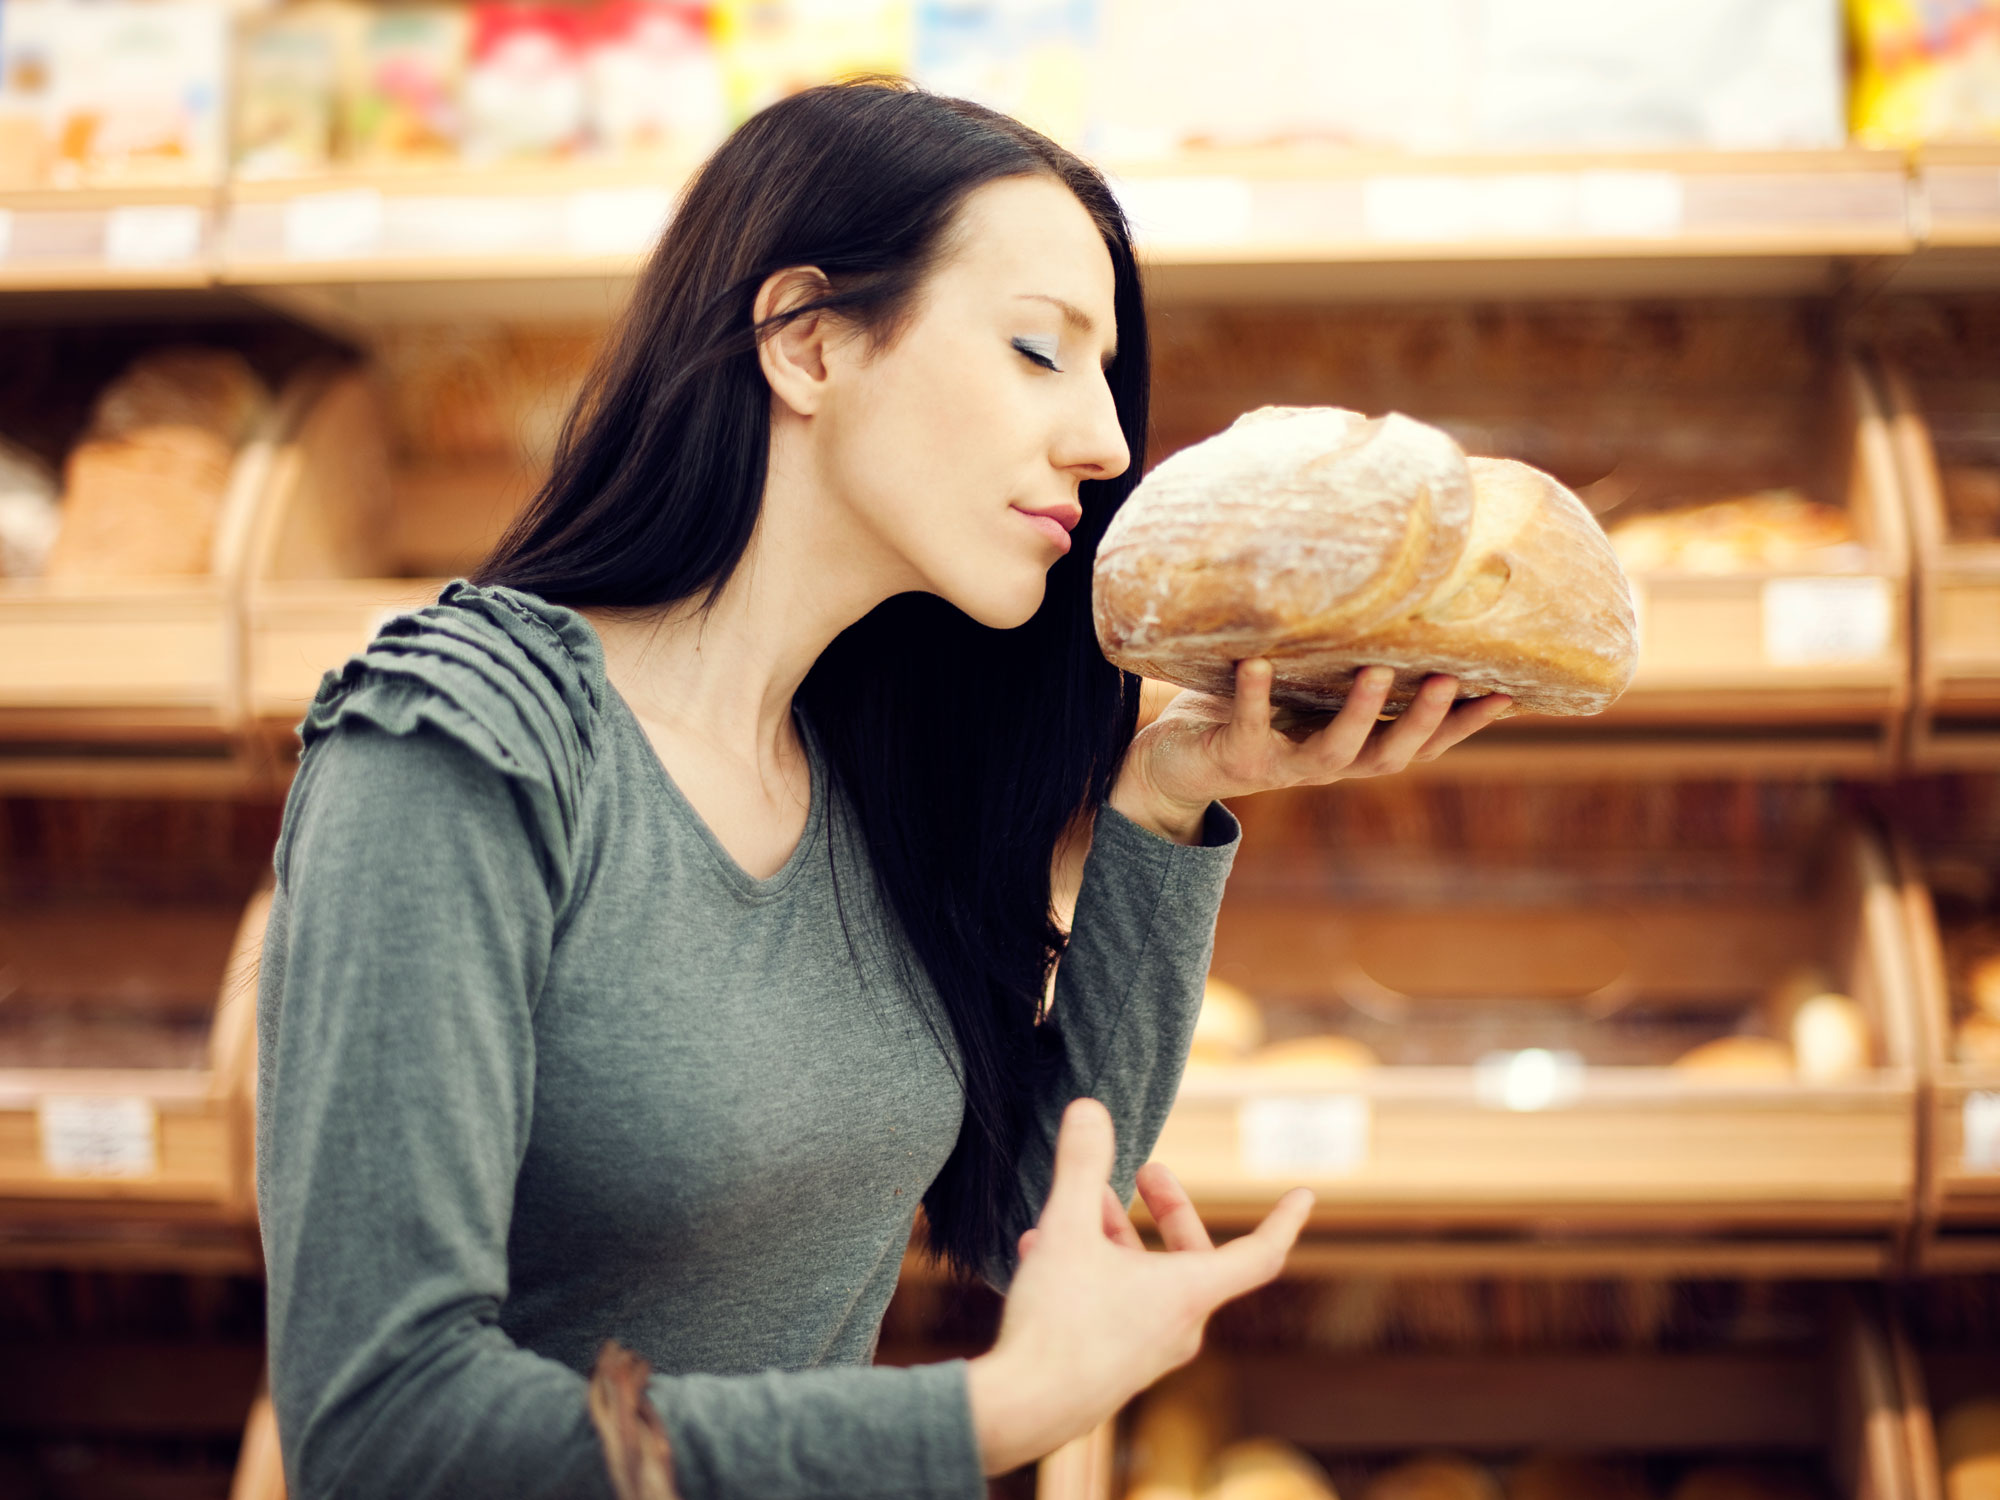 Баба булочка. Девушка ест хлеб. Человек булочка. Девушка с хлебом. Девушка в магазине хлеб.